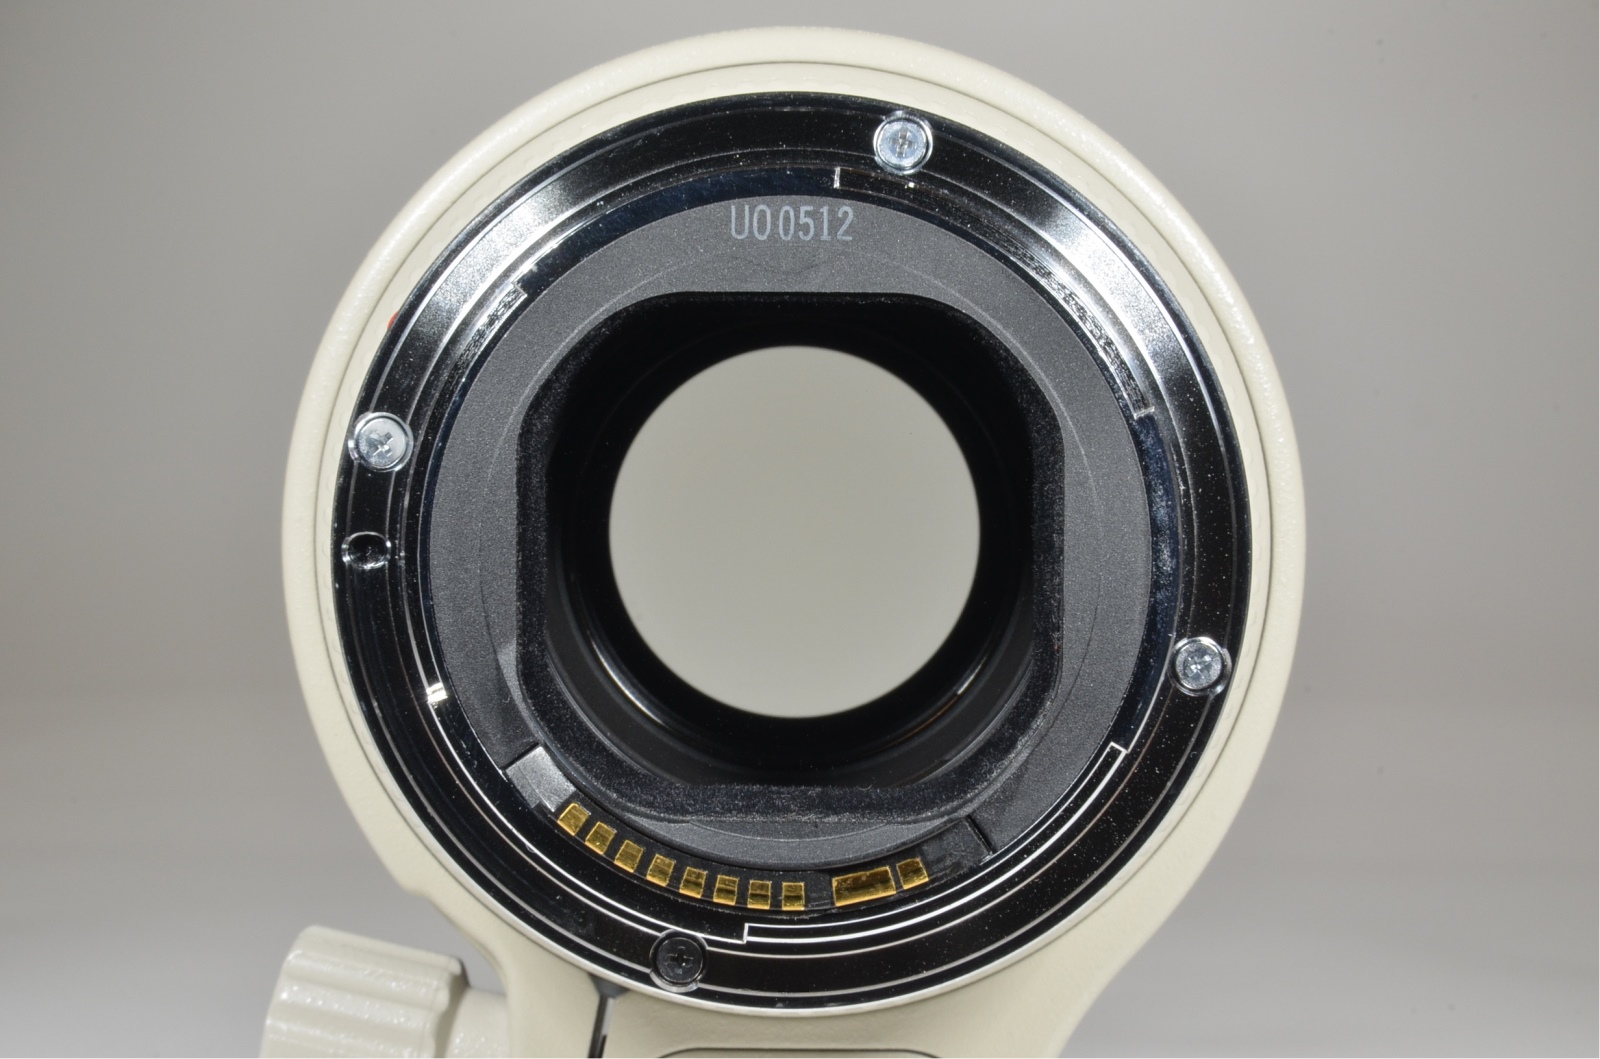 canon ef 70-200mm f/2.8 l usm ultrasonic lens from japan